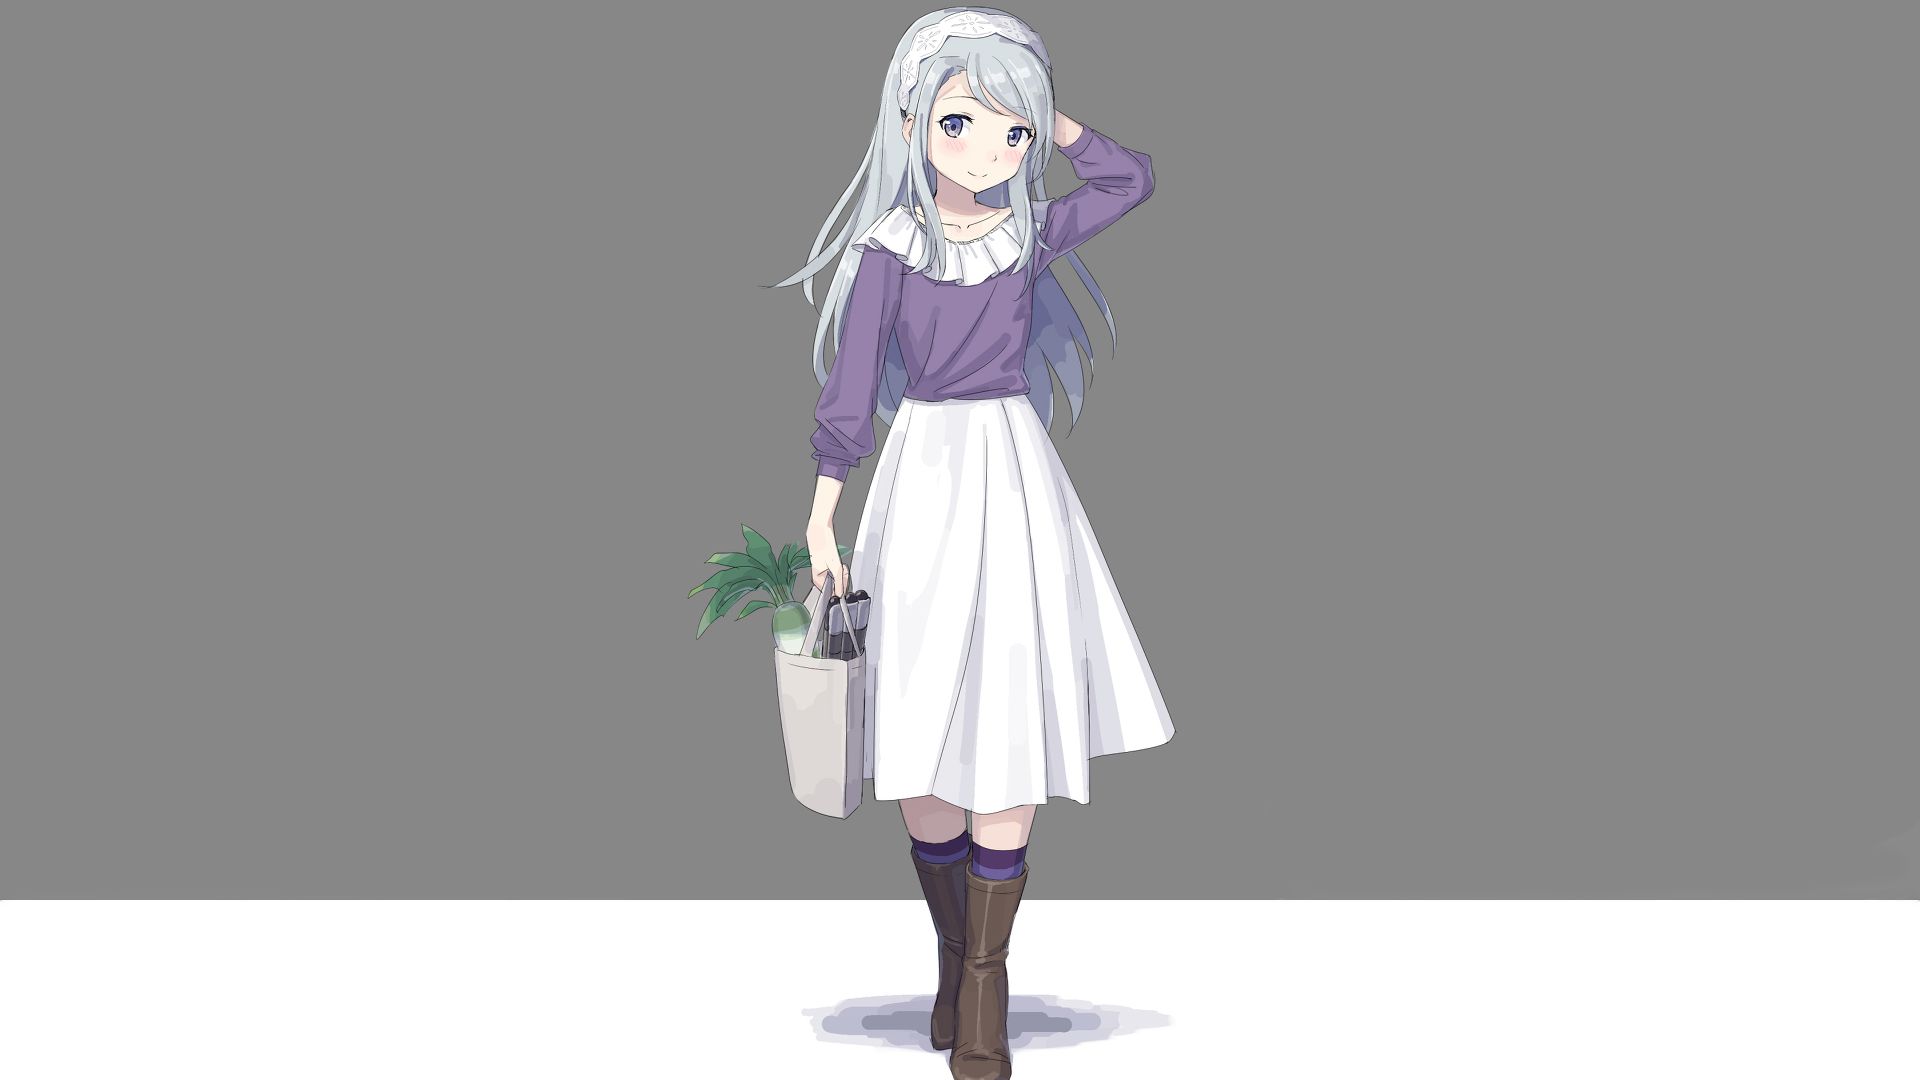 Wallpaper Sagiri, kancolle, cute anime girl, minimal